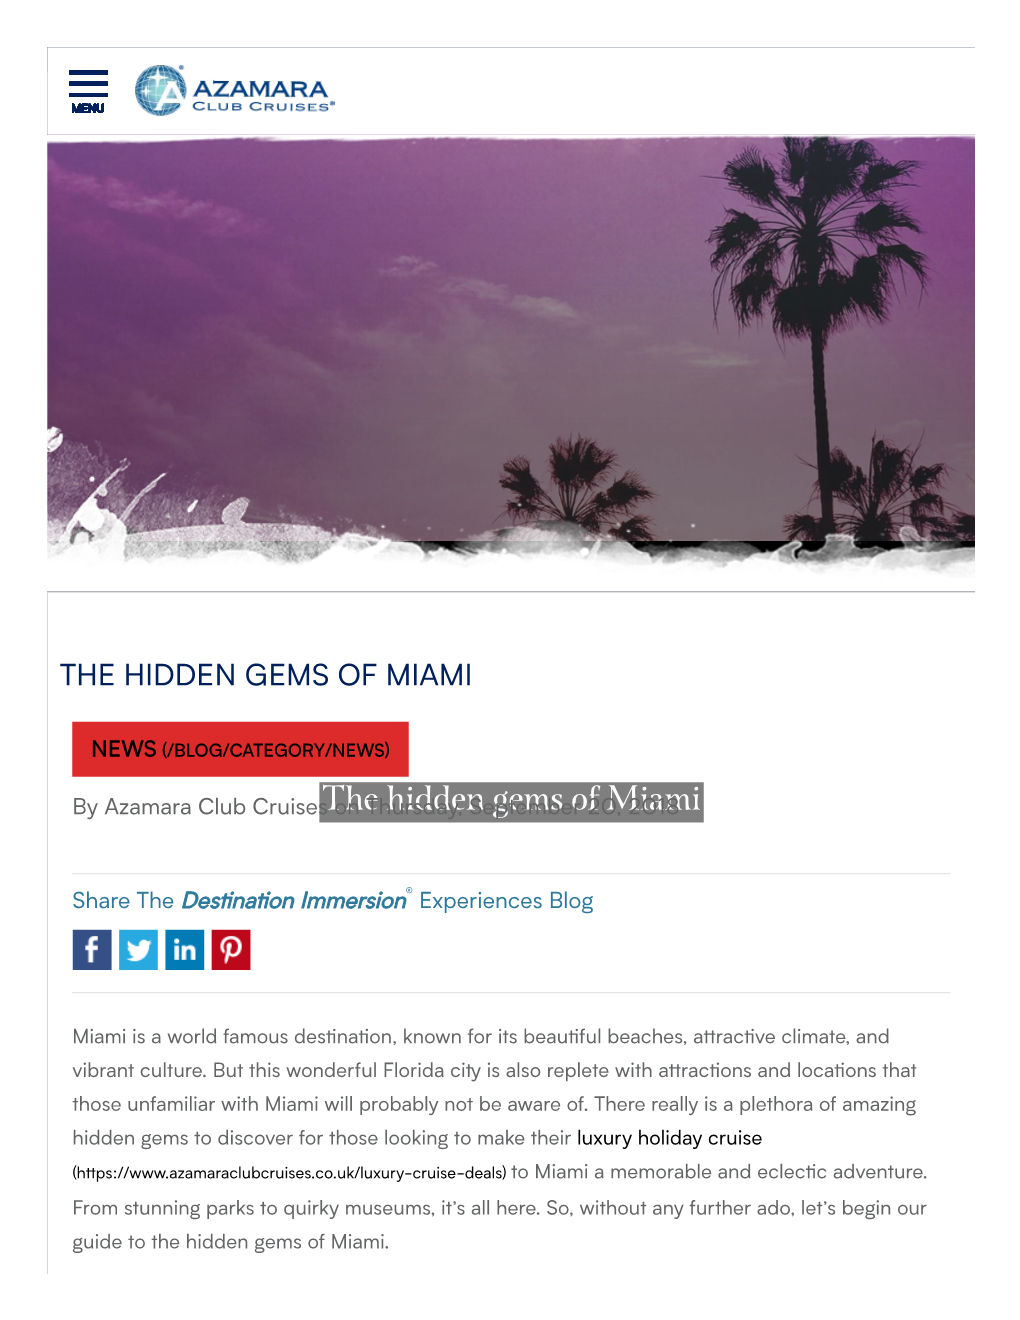 The Hidden Gems of Miami